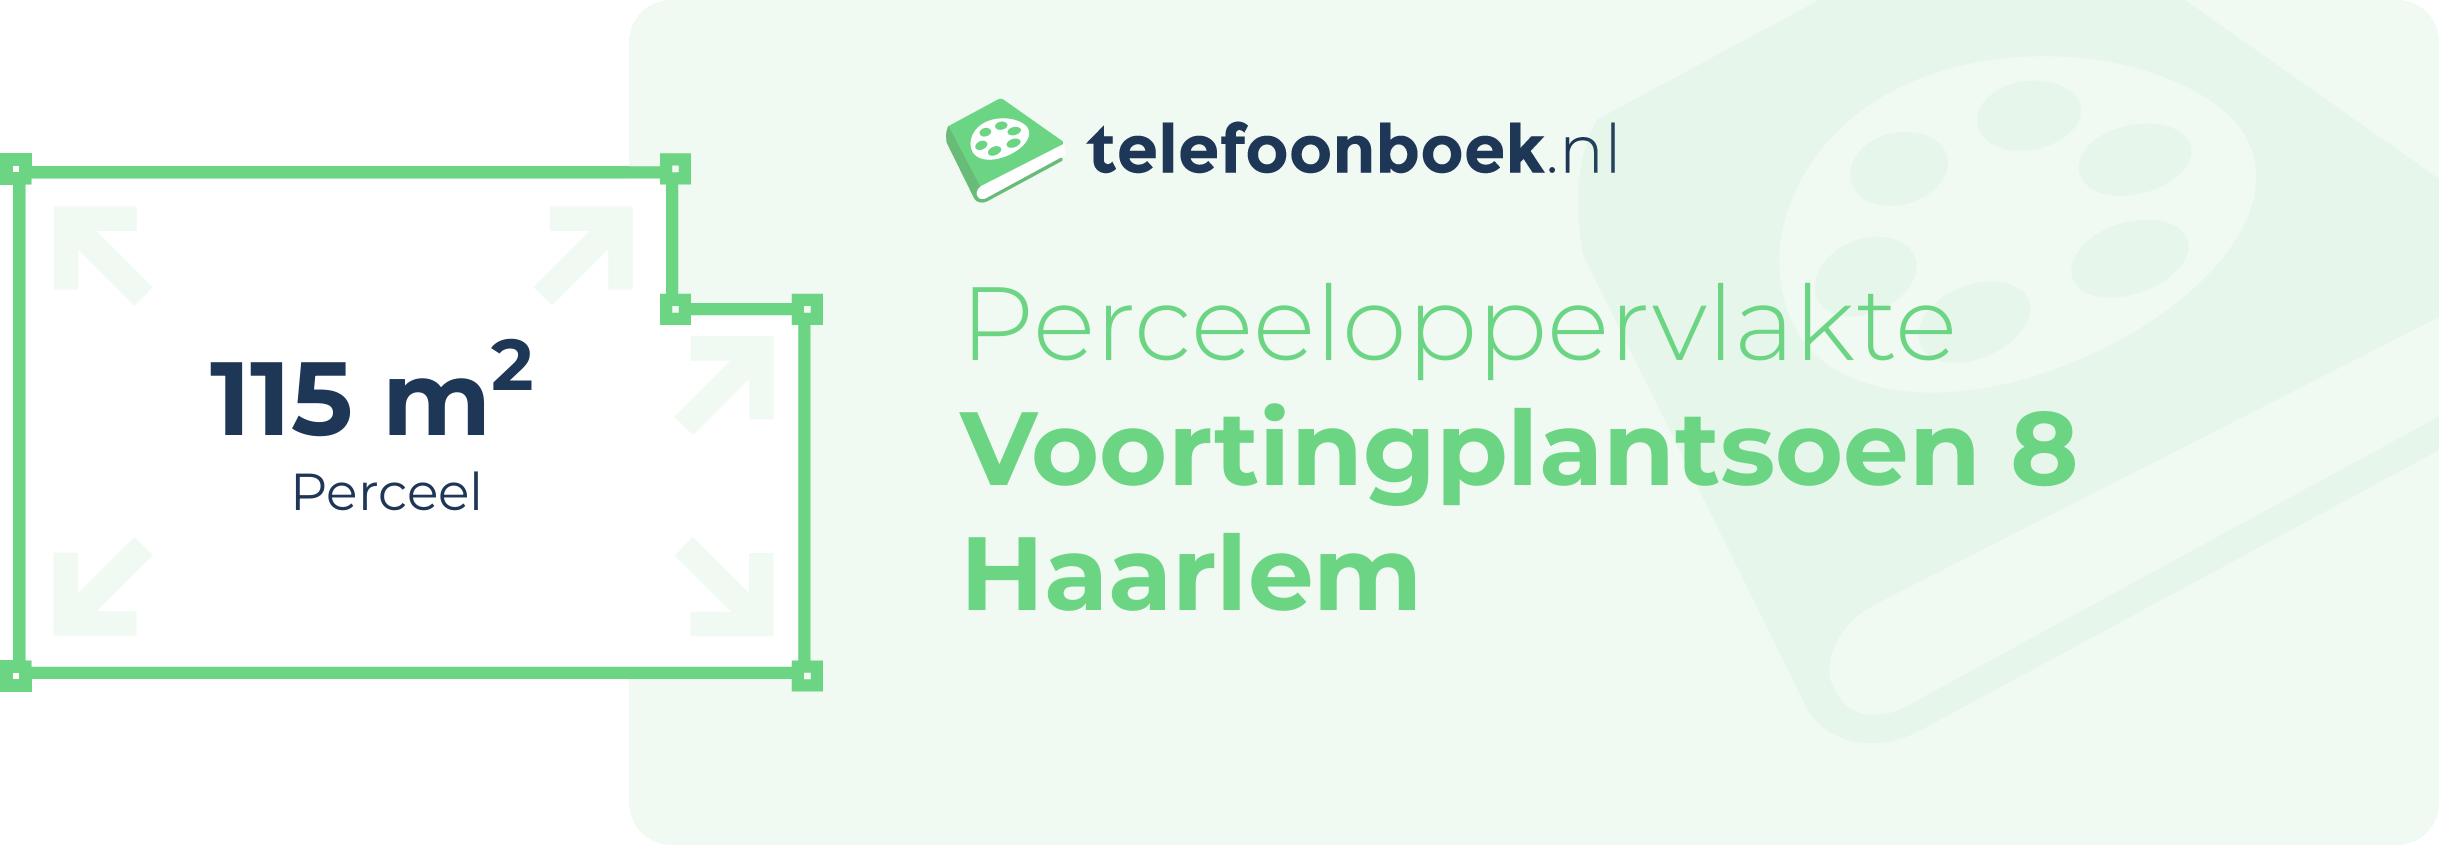 Perceeloppervlakte Voortingplantsoen 8 Haarlem